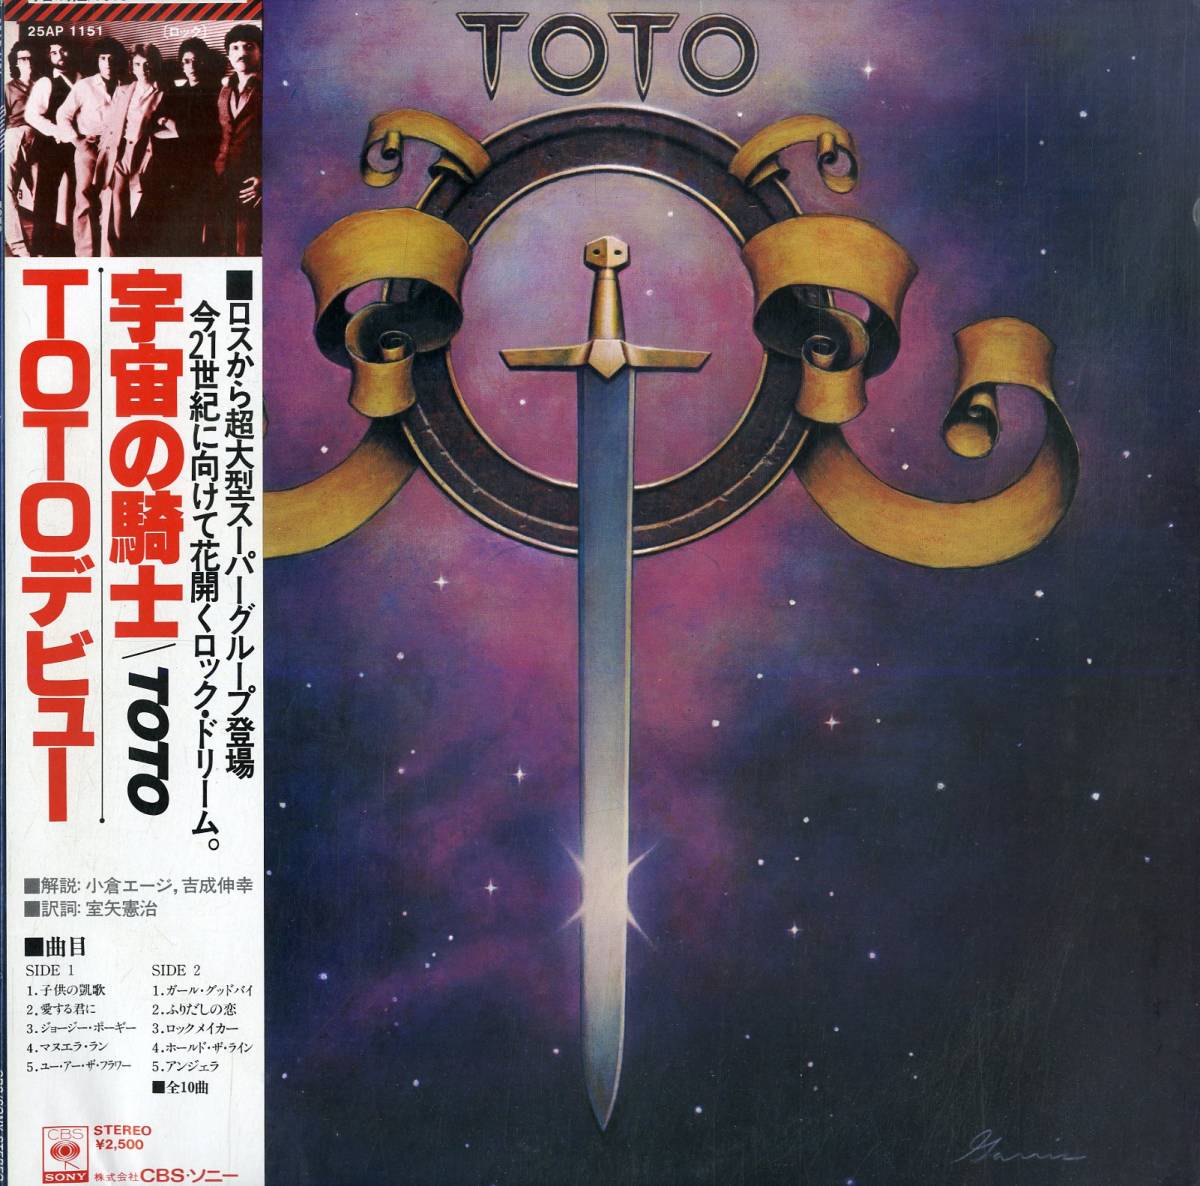 A00579485/LP/トト (TOTO)「宇宙の騎士 Toto (1978年・25AP-1151)」_画像1